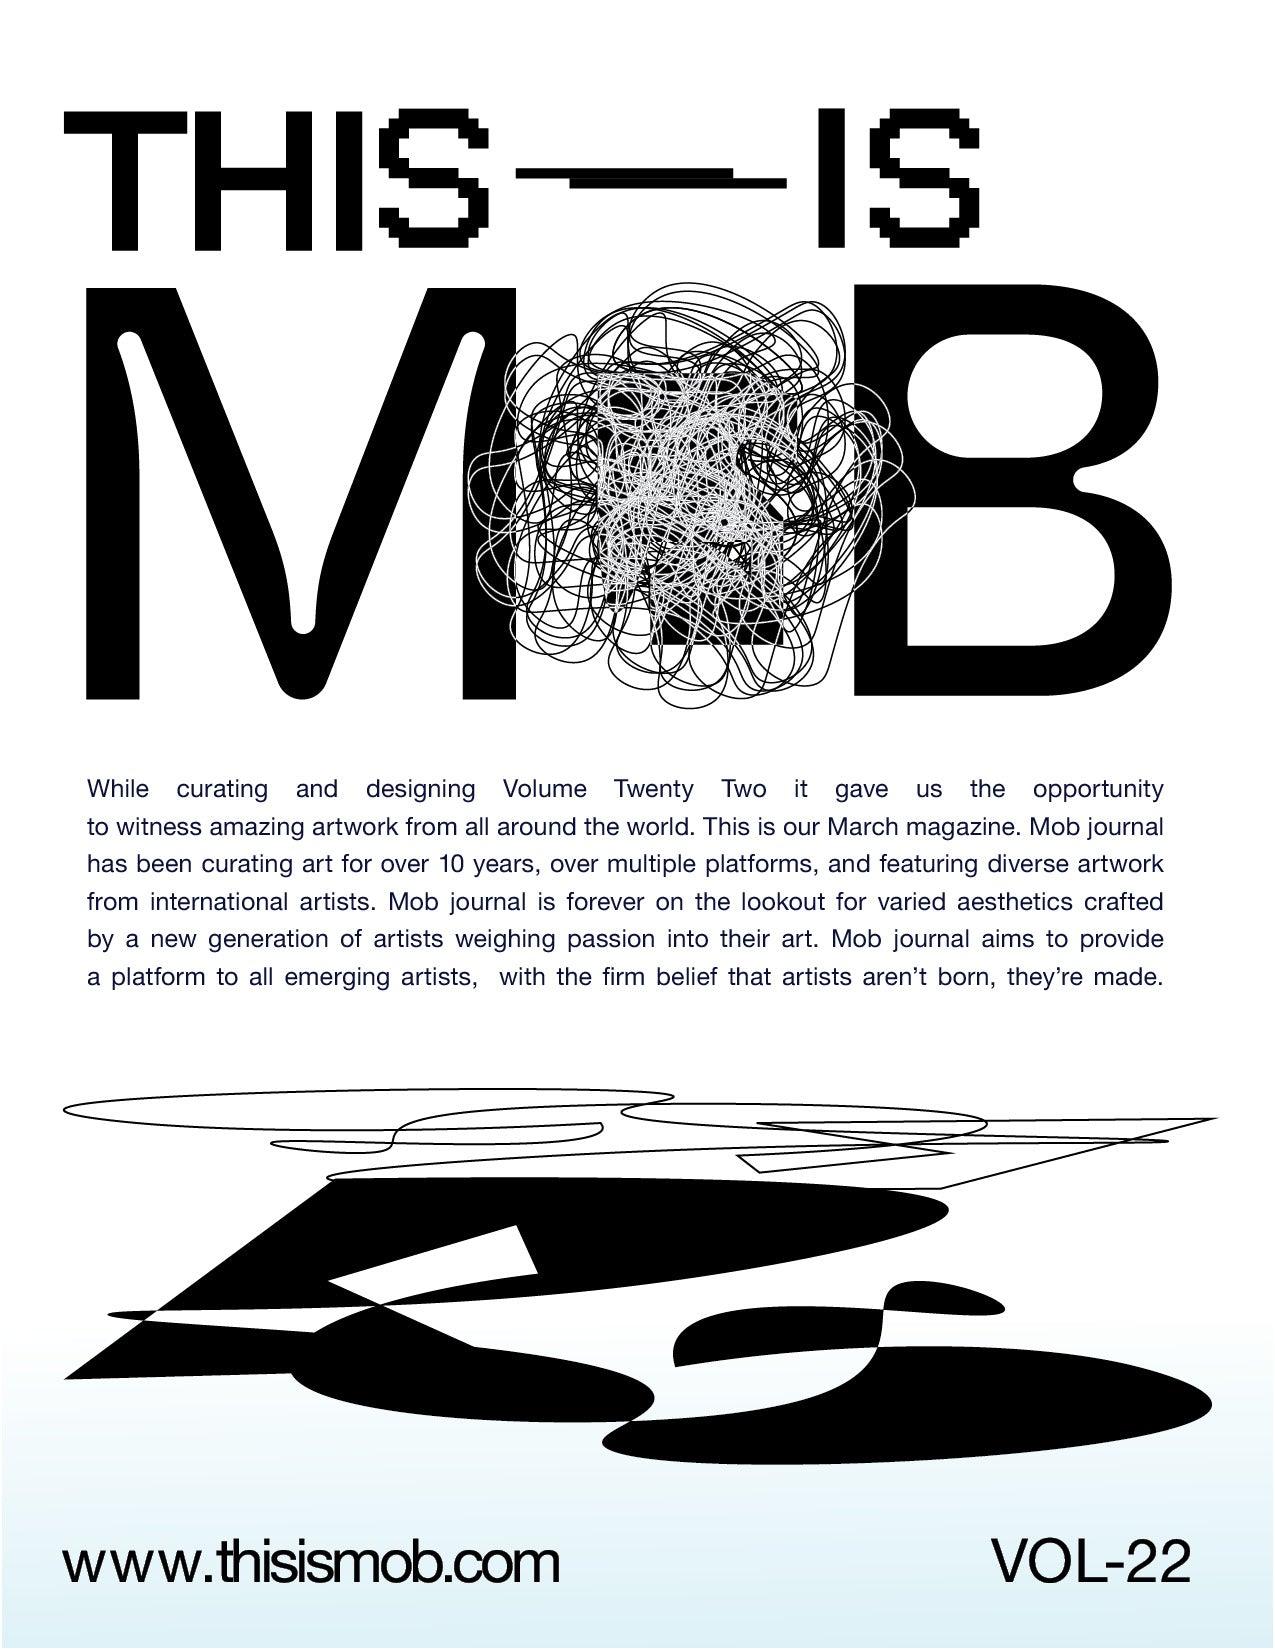 MOB JOURNAL | VOLUME TWENTY TWO | ISSUE #27 - Mob Journal